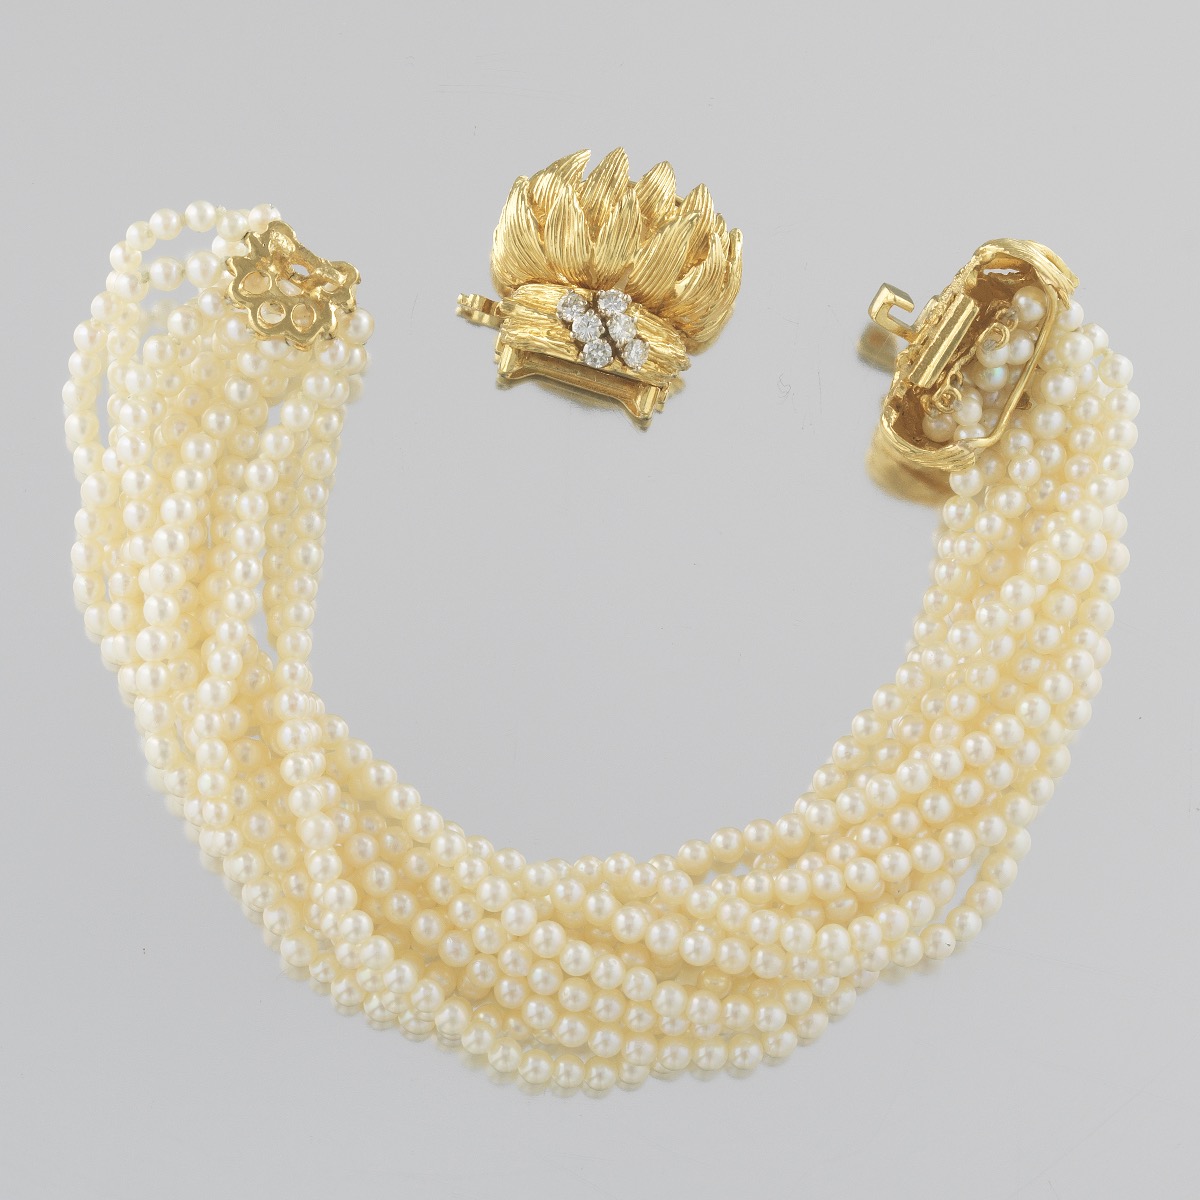 Ladies' 18k Gold and Diamond Bracelet - Image 4 of 6